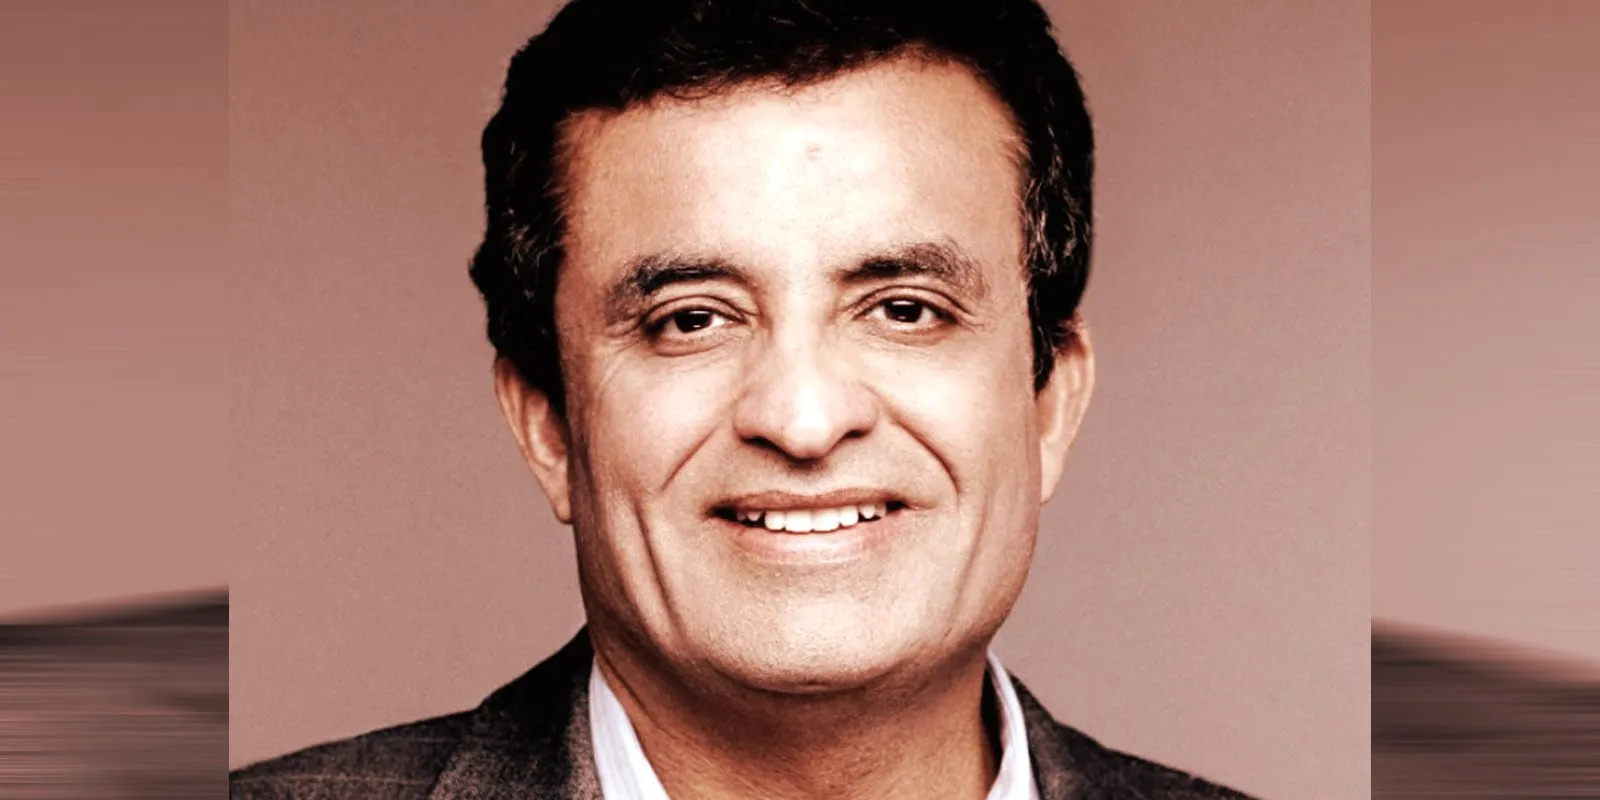 Auradine co-founder and CEO Rajiv Khemani. Image: Auradine